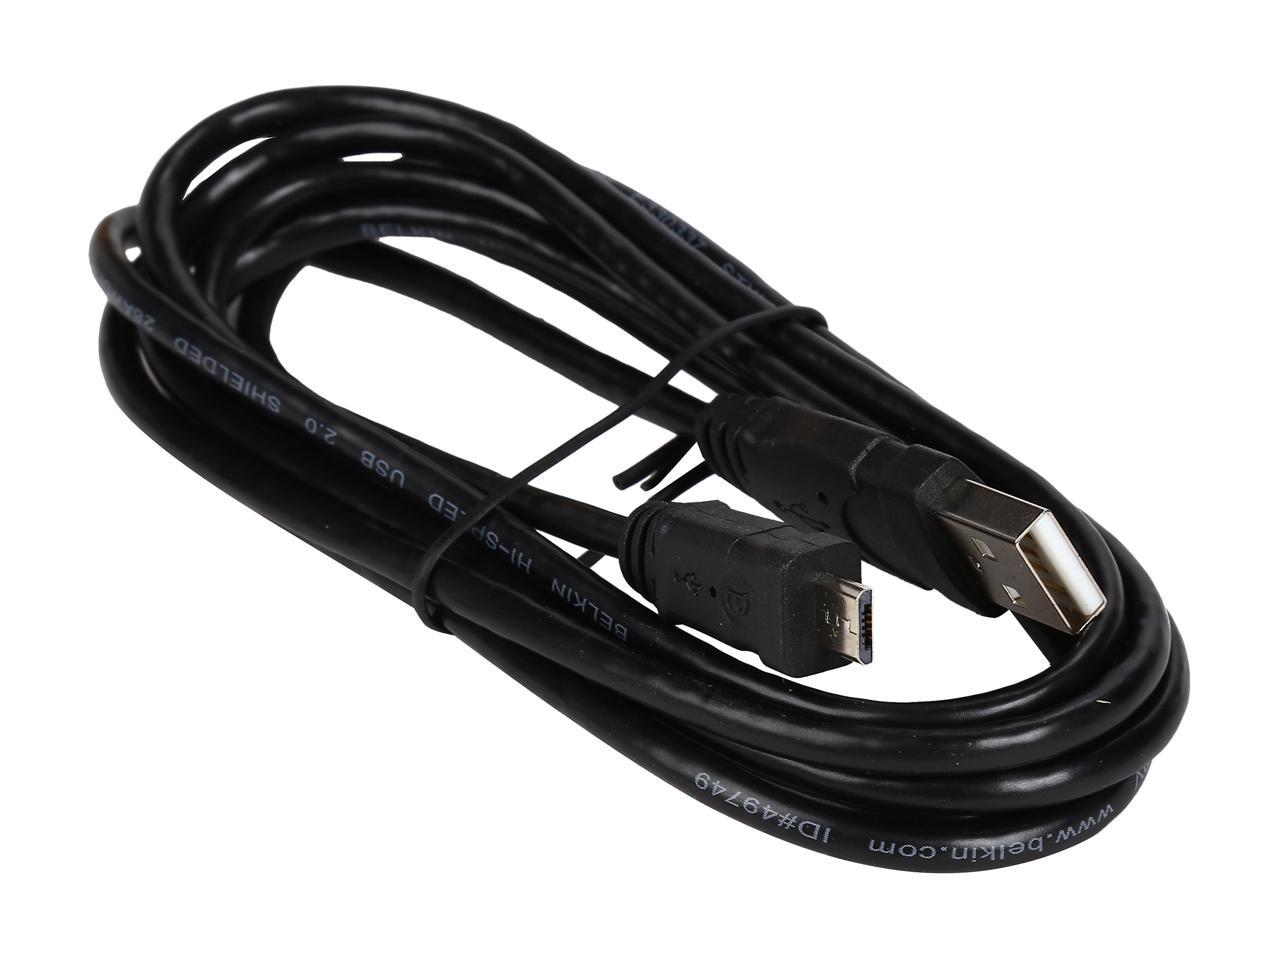 Belkin F3U151B06 Black USB Cable - image 2 of 3